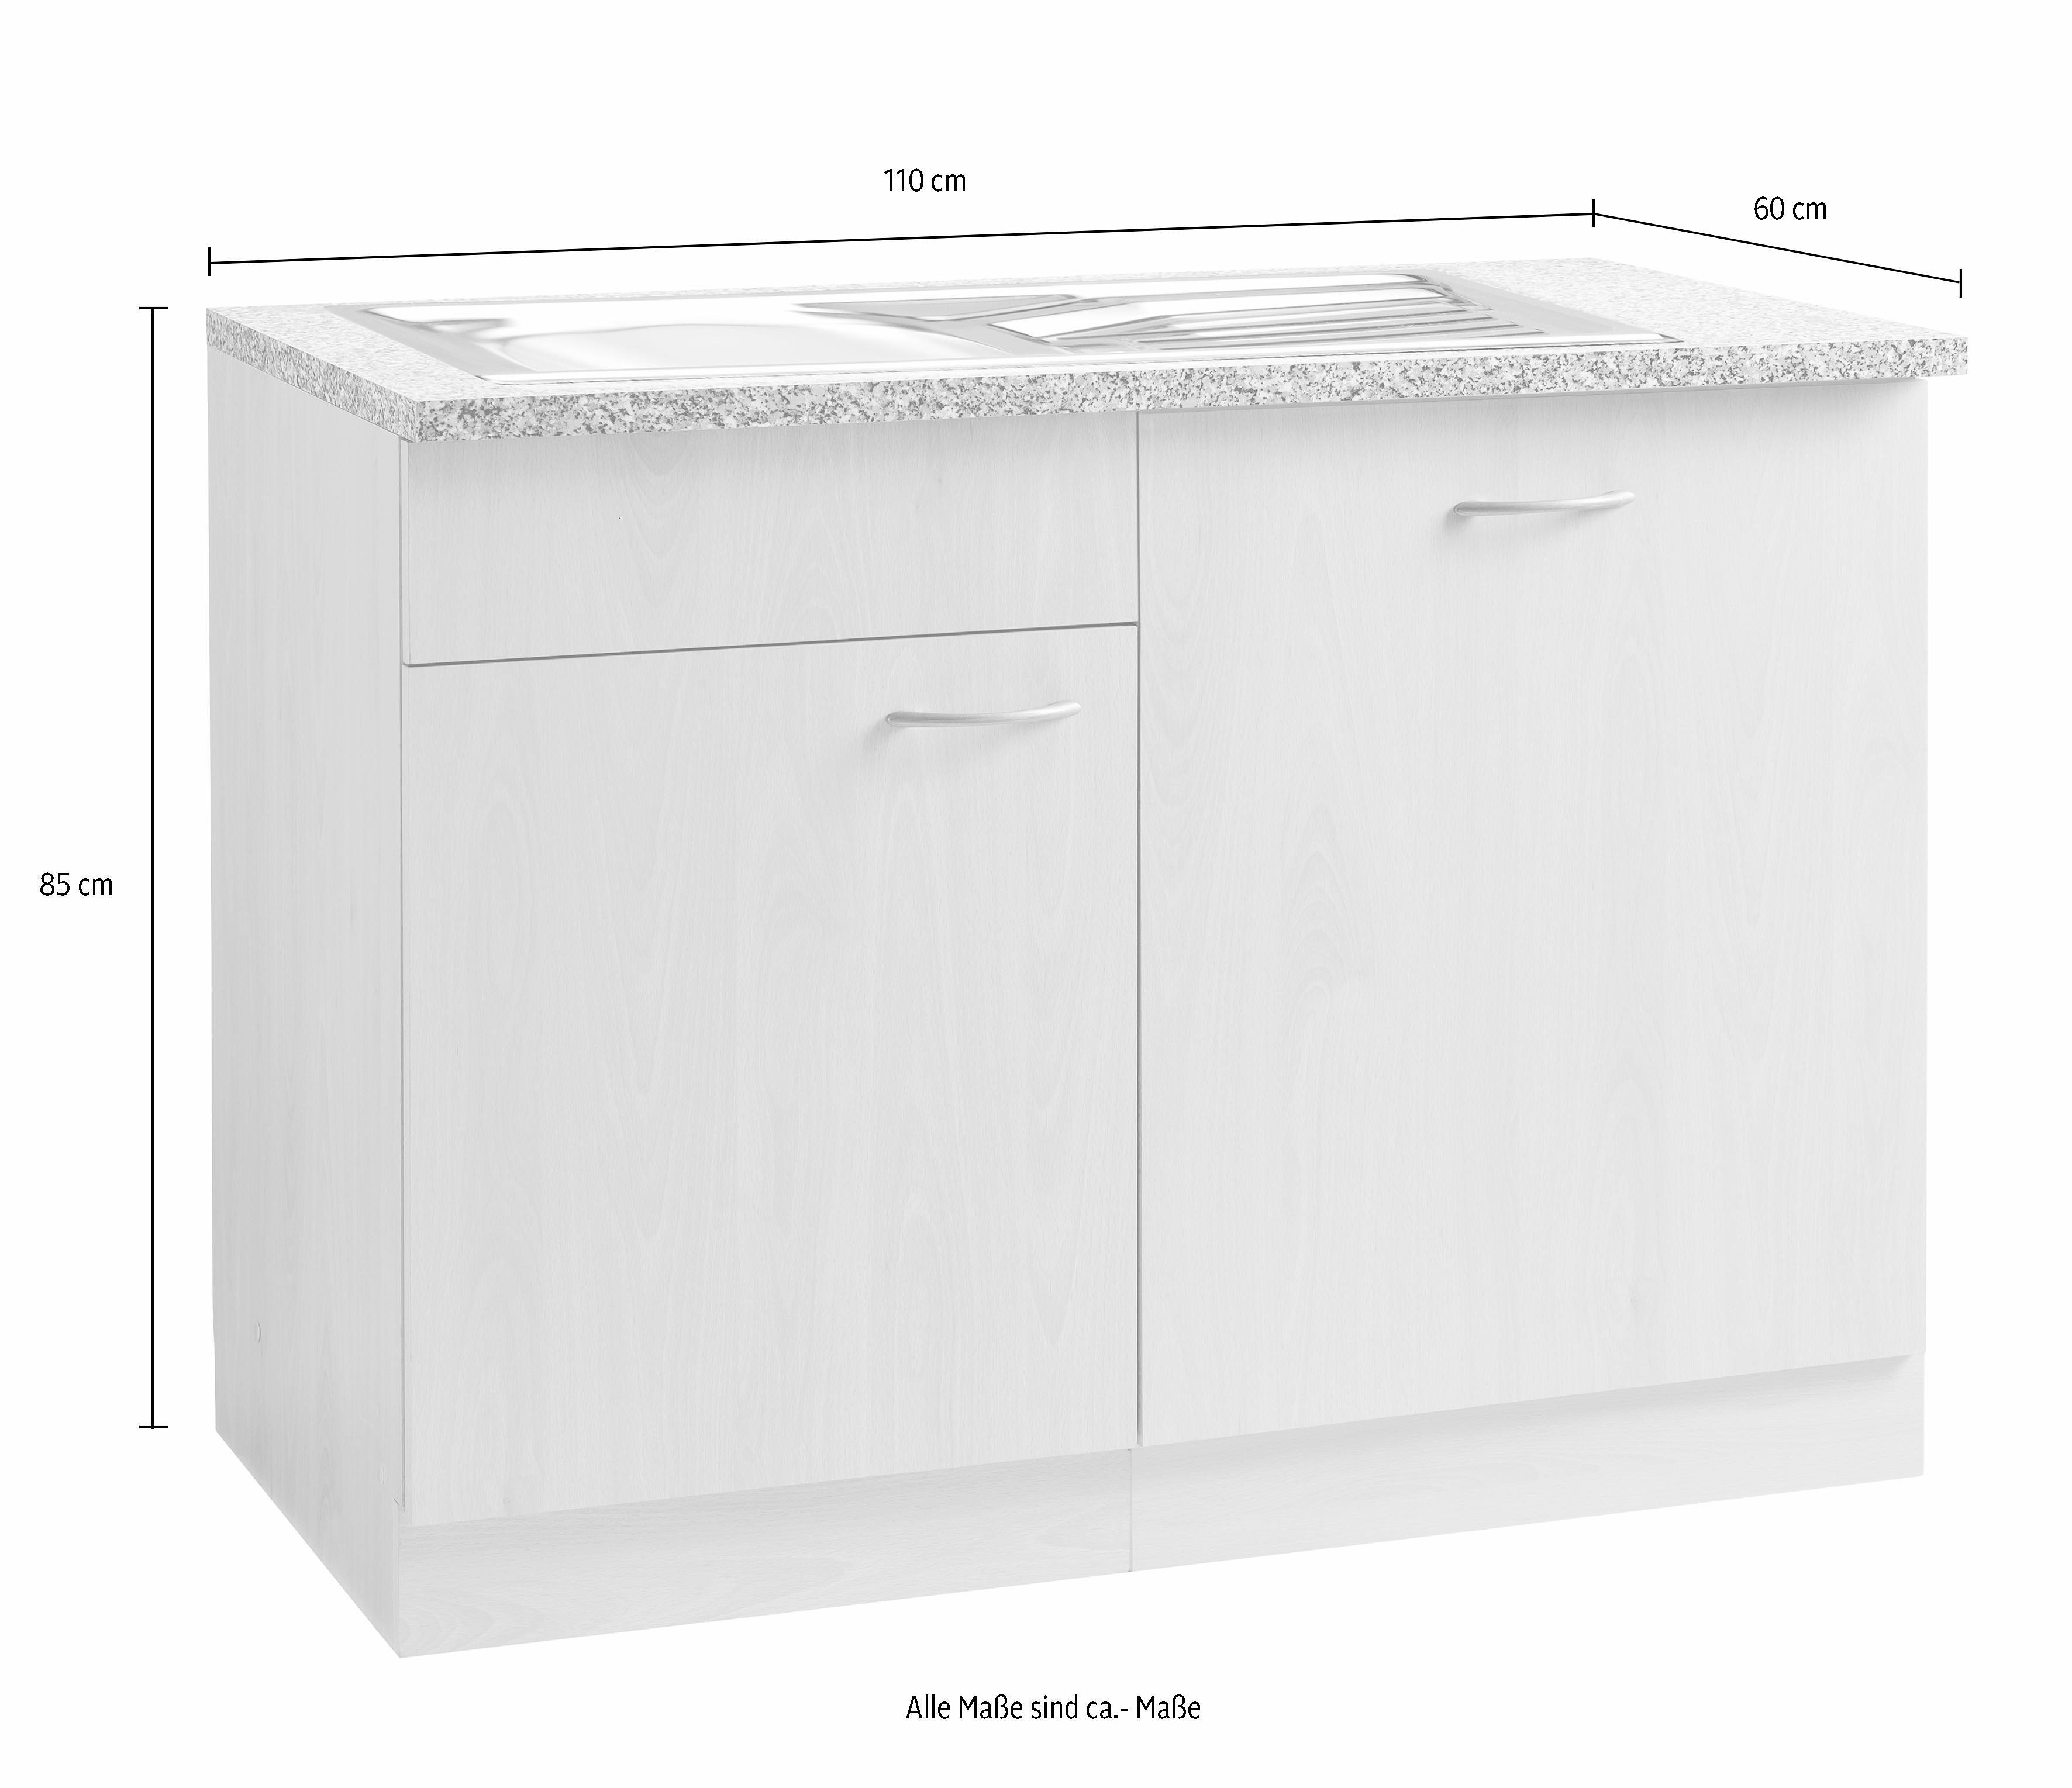 Ozeanblau | Küchen wiho breit, Kiel cm Hellgrau inkl. Geschirrspüler Tür/Griff/Sockel 110 Spülenschrank für